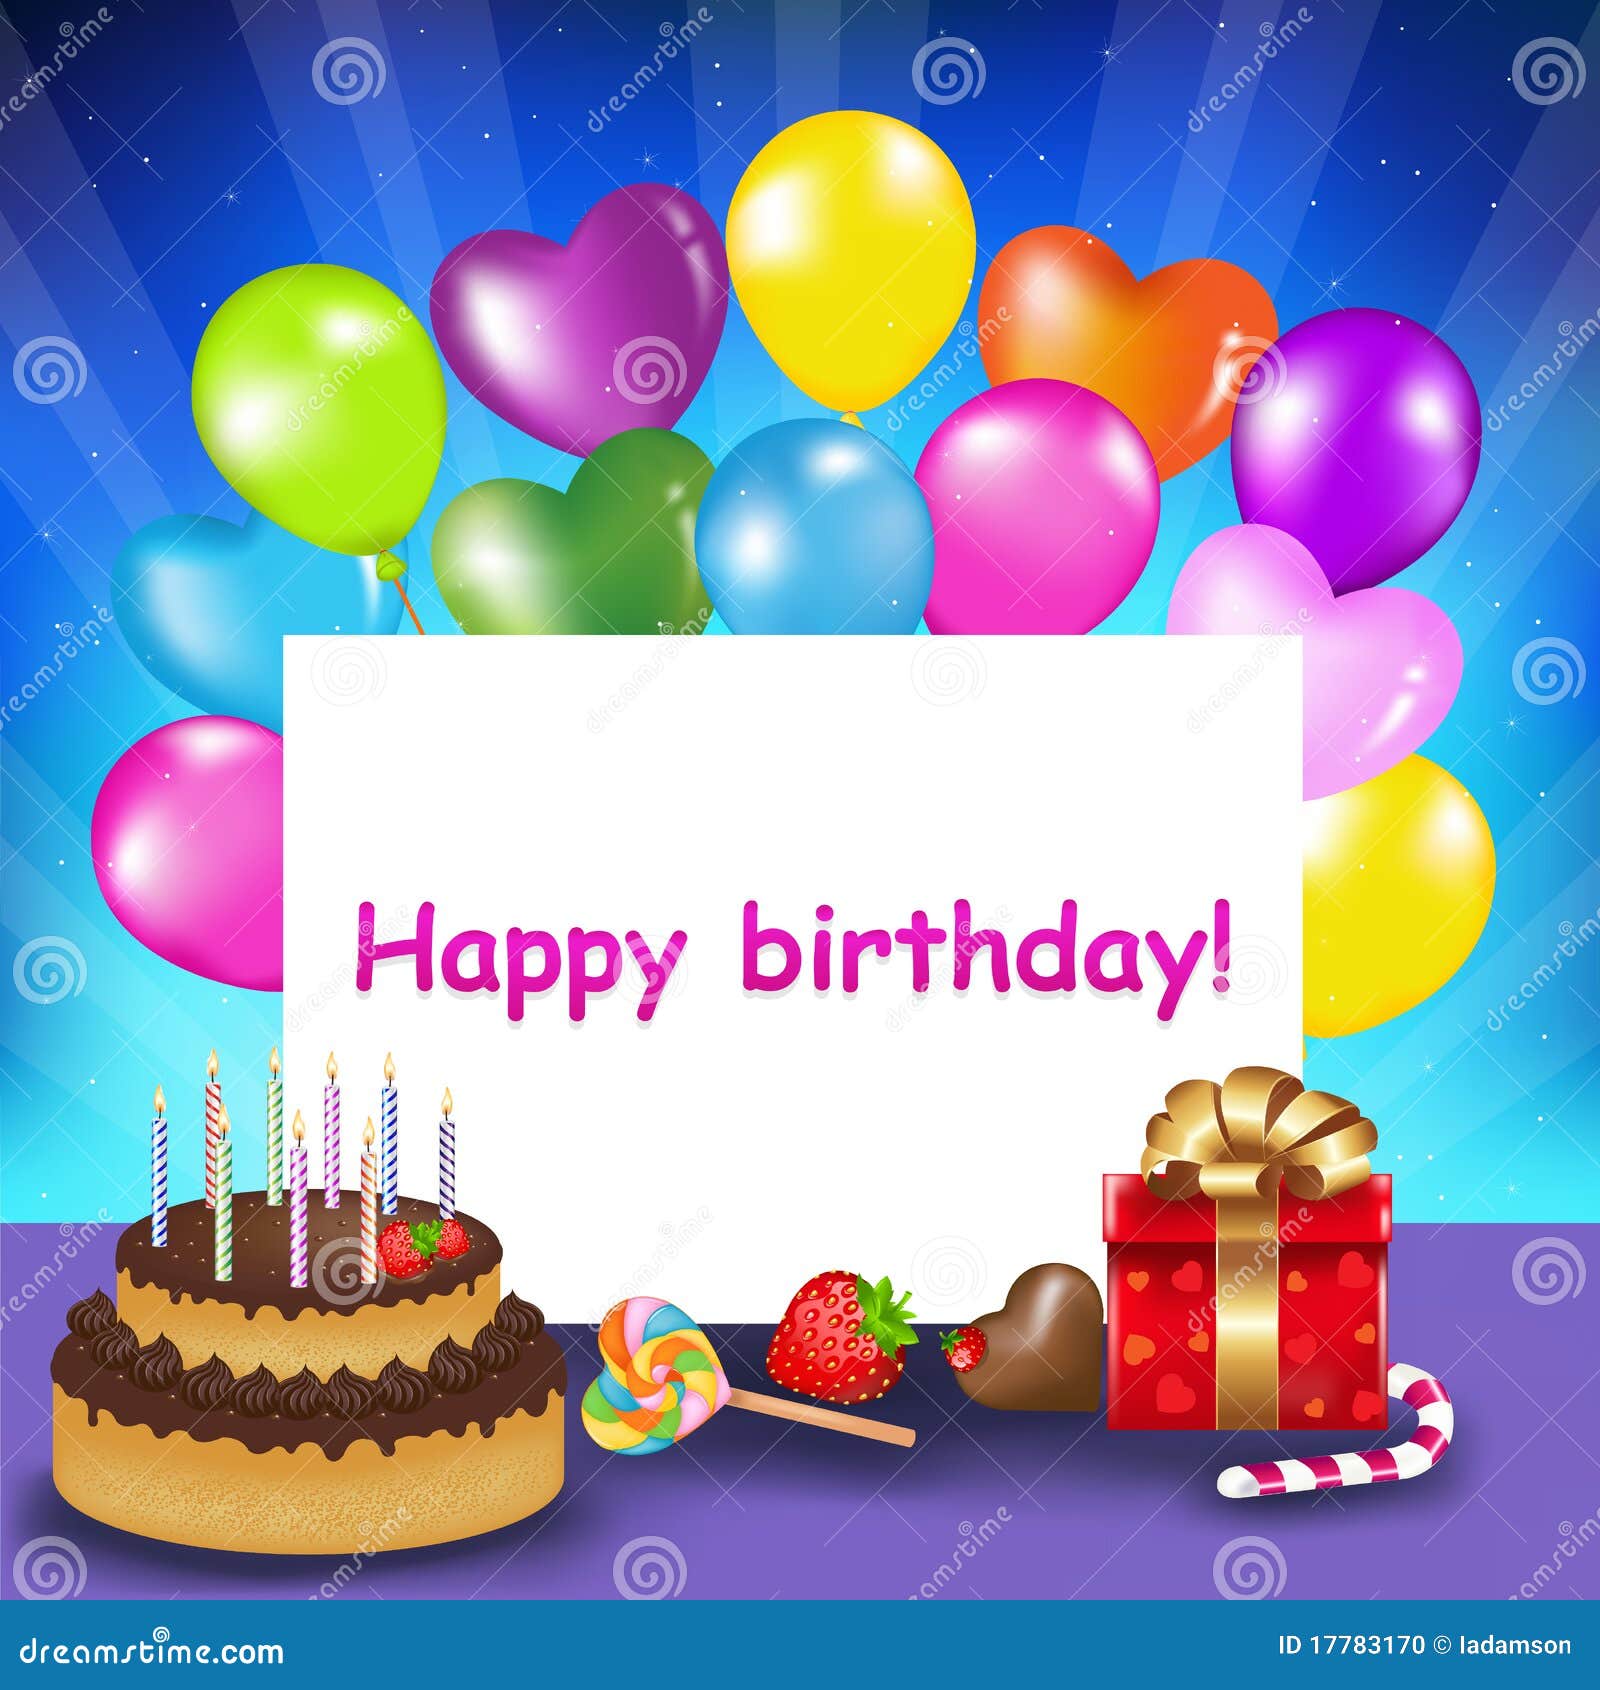 happy-birthday-card-vector-17783170.jpg